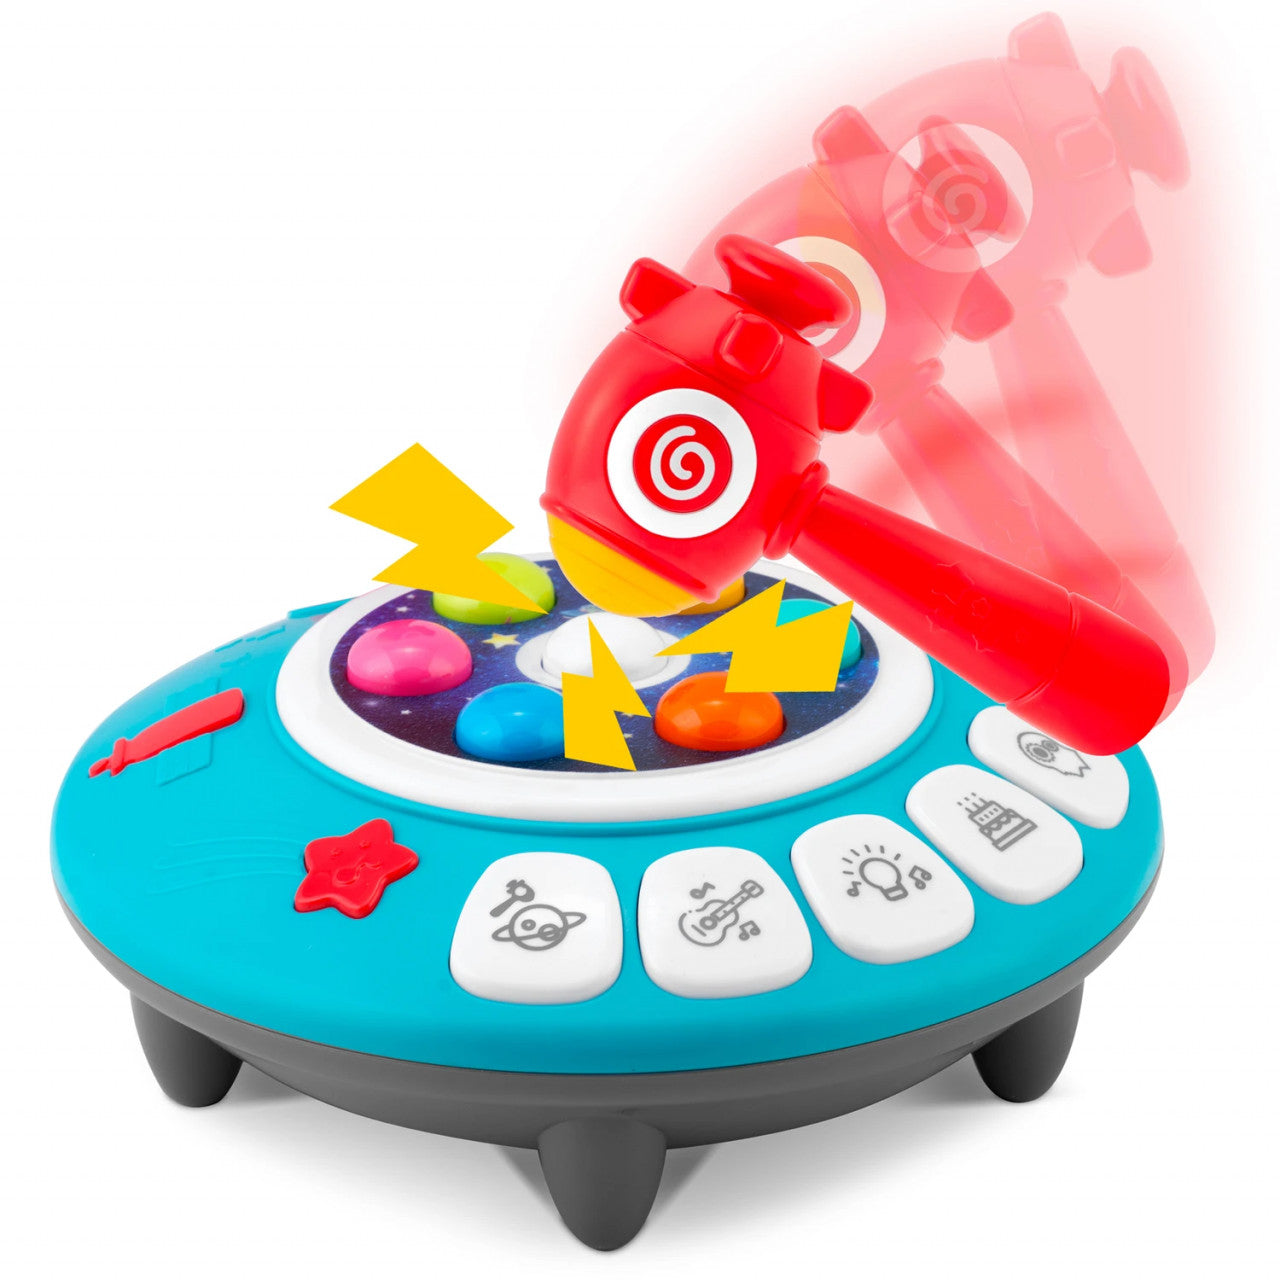 Jucarie interactiva pentru copii, cu suntete si lumini, Ricokids, RK-753, Arcade Cosmos